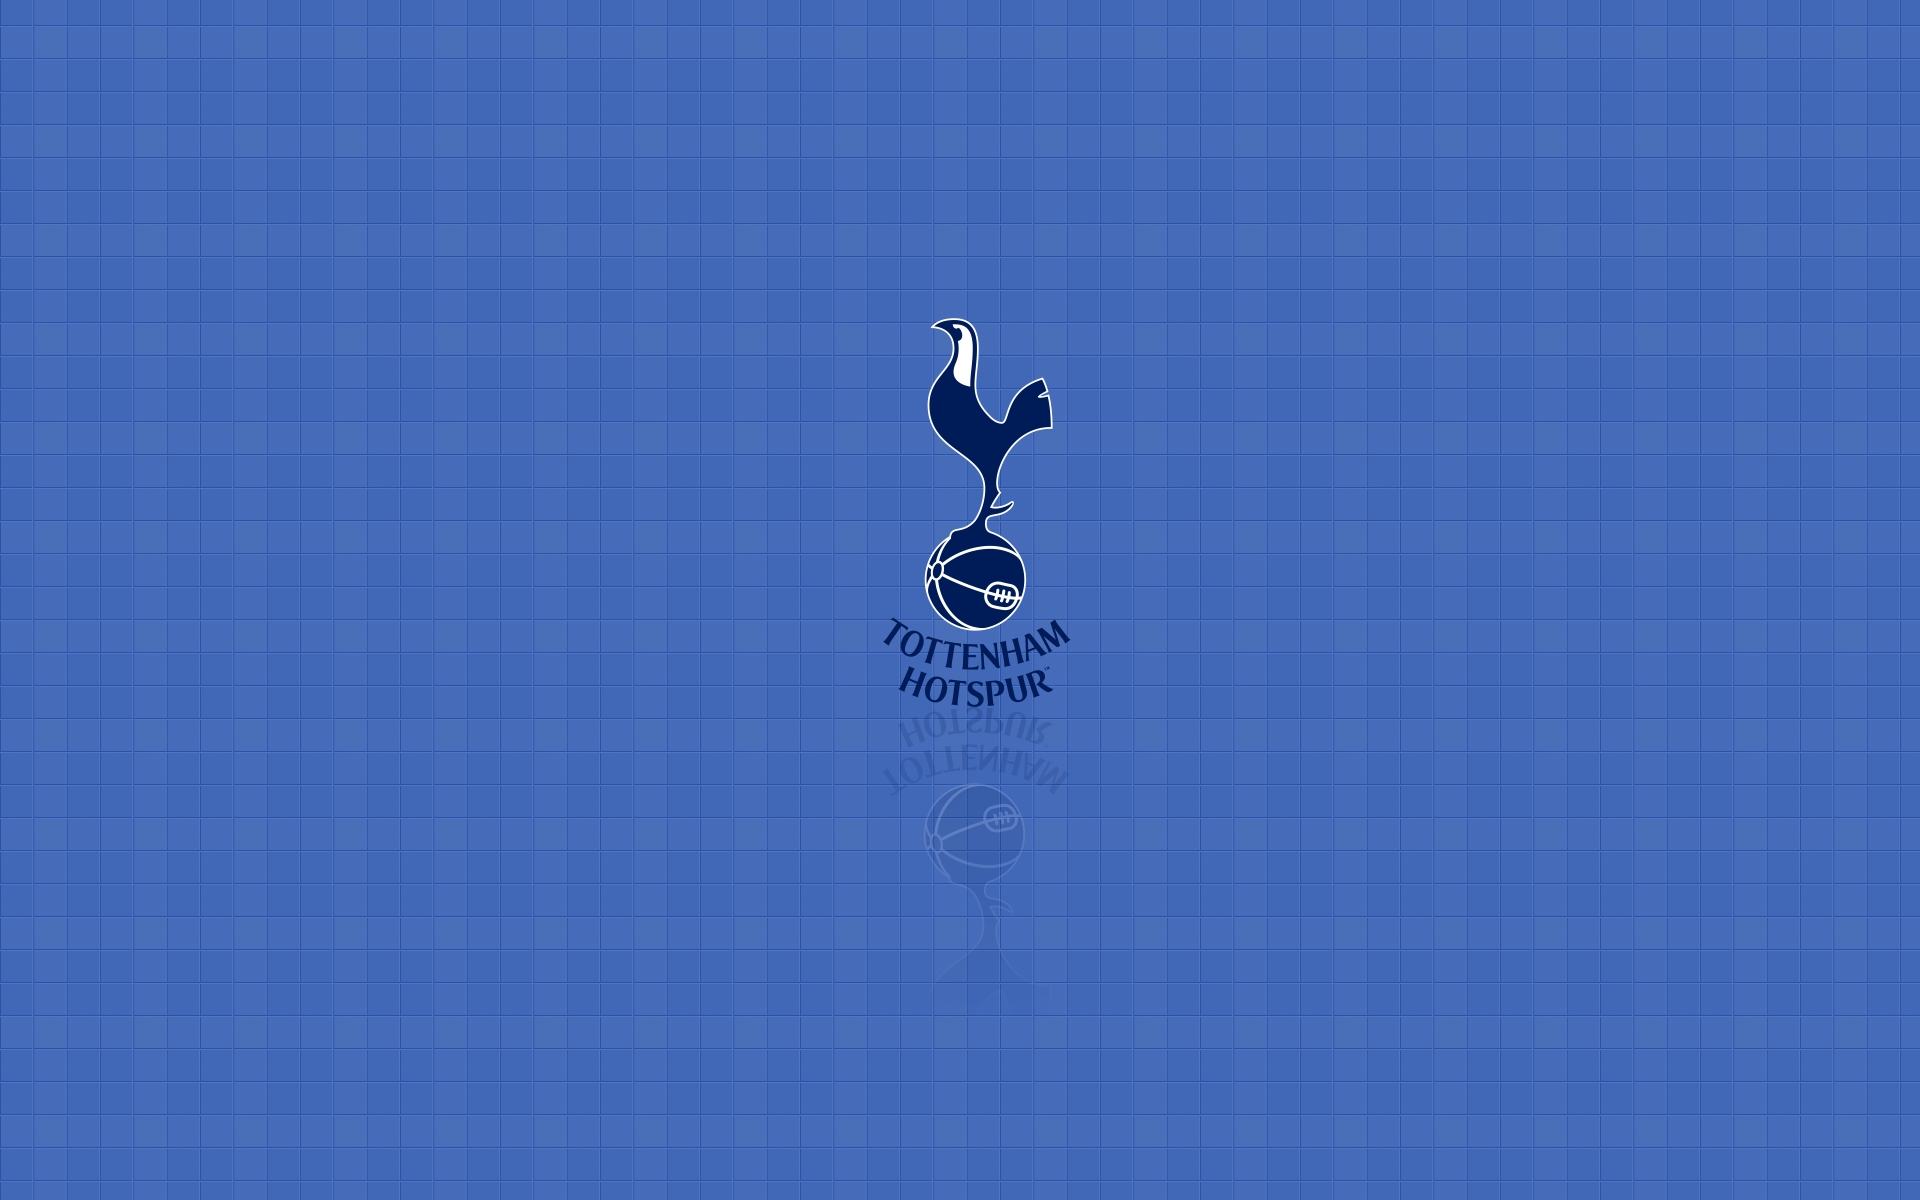 Tottenham Hotspur Logos Download tottenham hotspur logos download